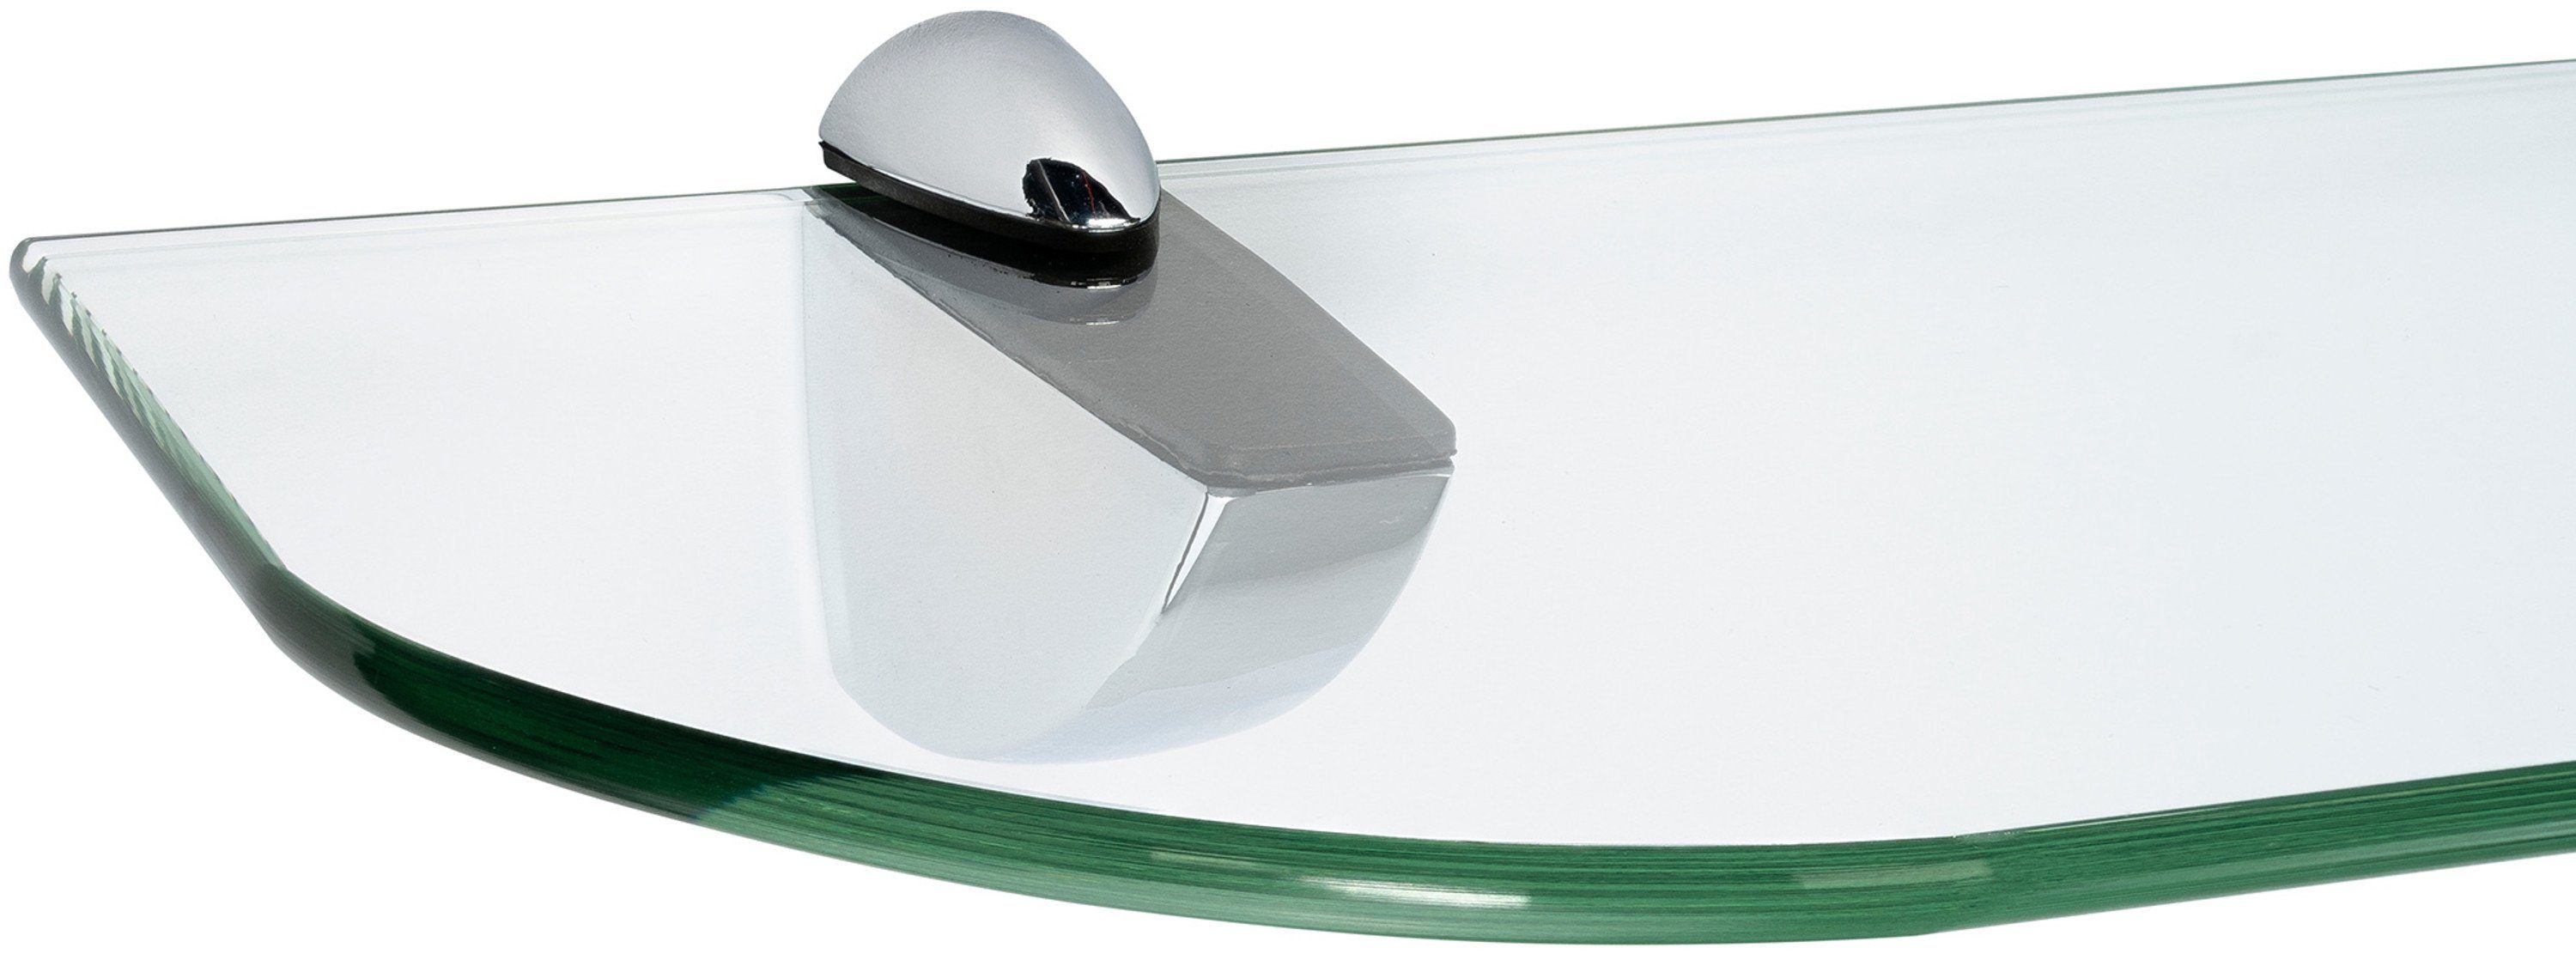 ib style Wandregal Glasregal 6mm klar 40 x 15 cm + Clip PELI Verchromt, Glasboden aus ESG-Sicherheitsglas - Wandregal